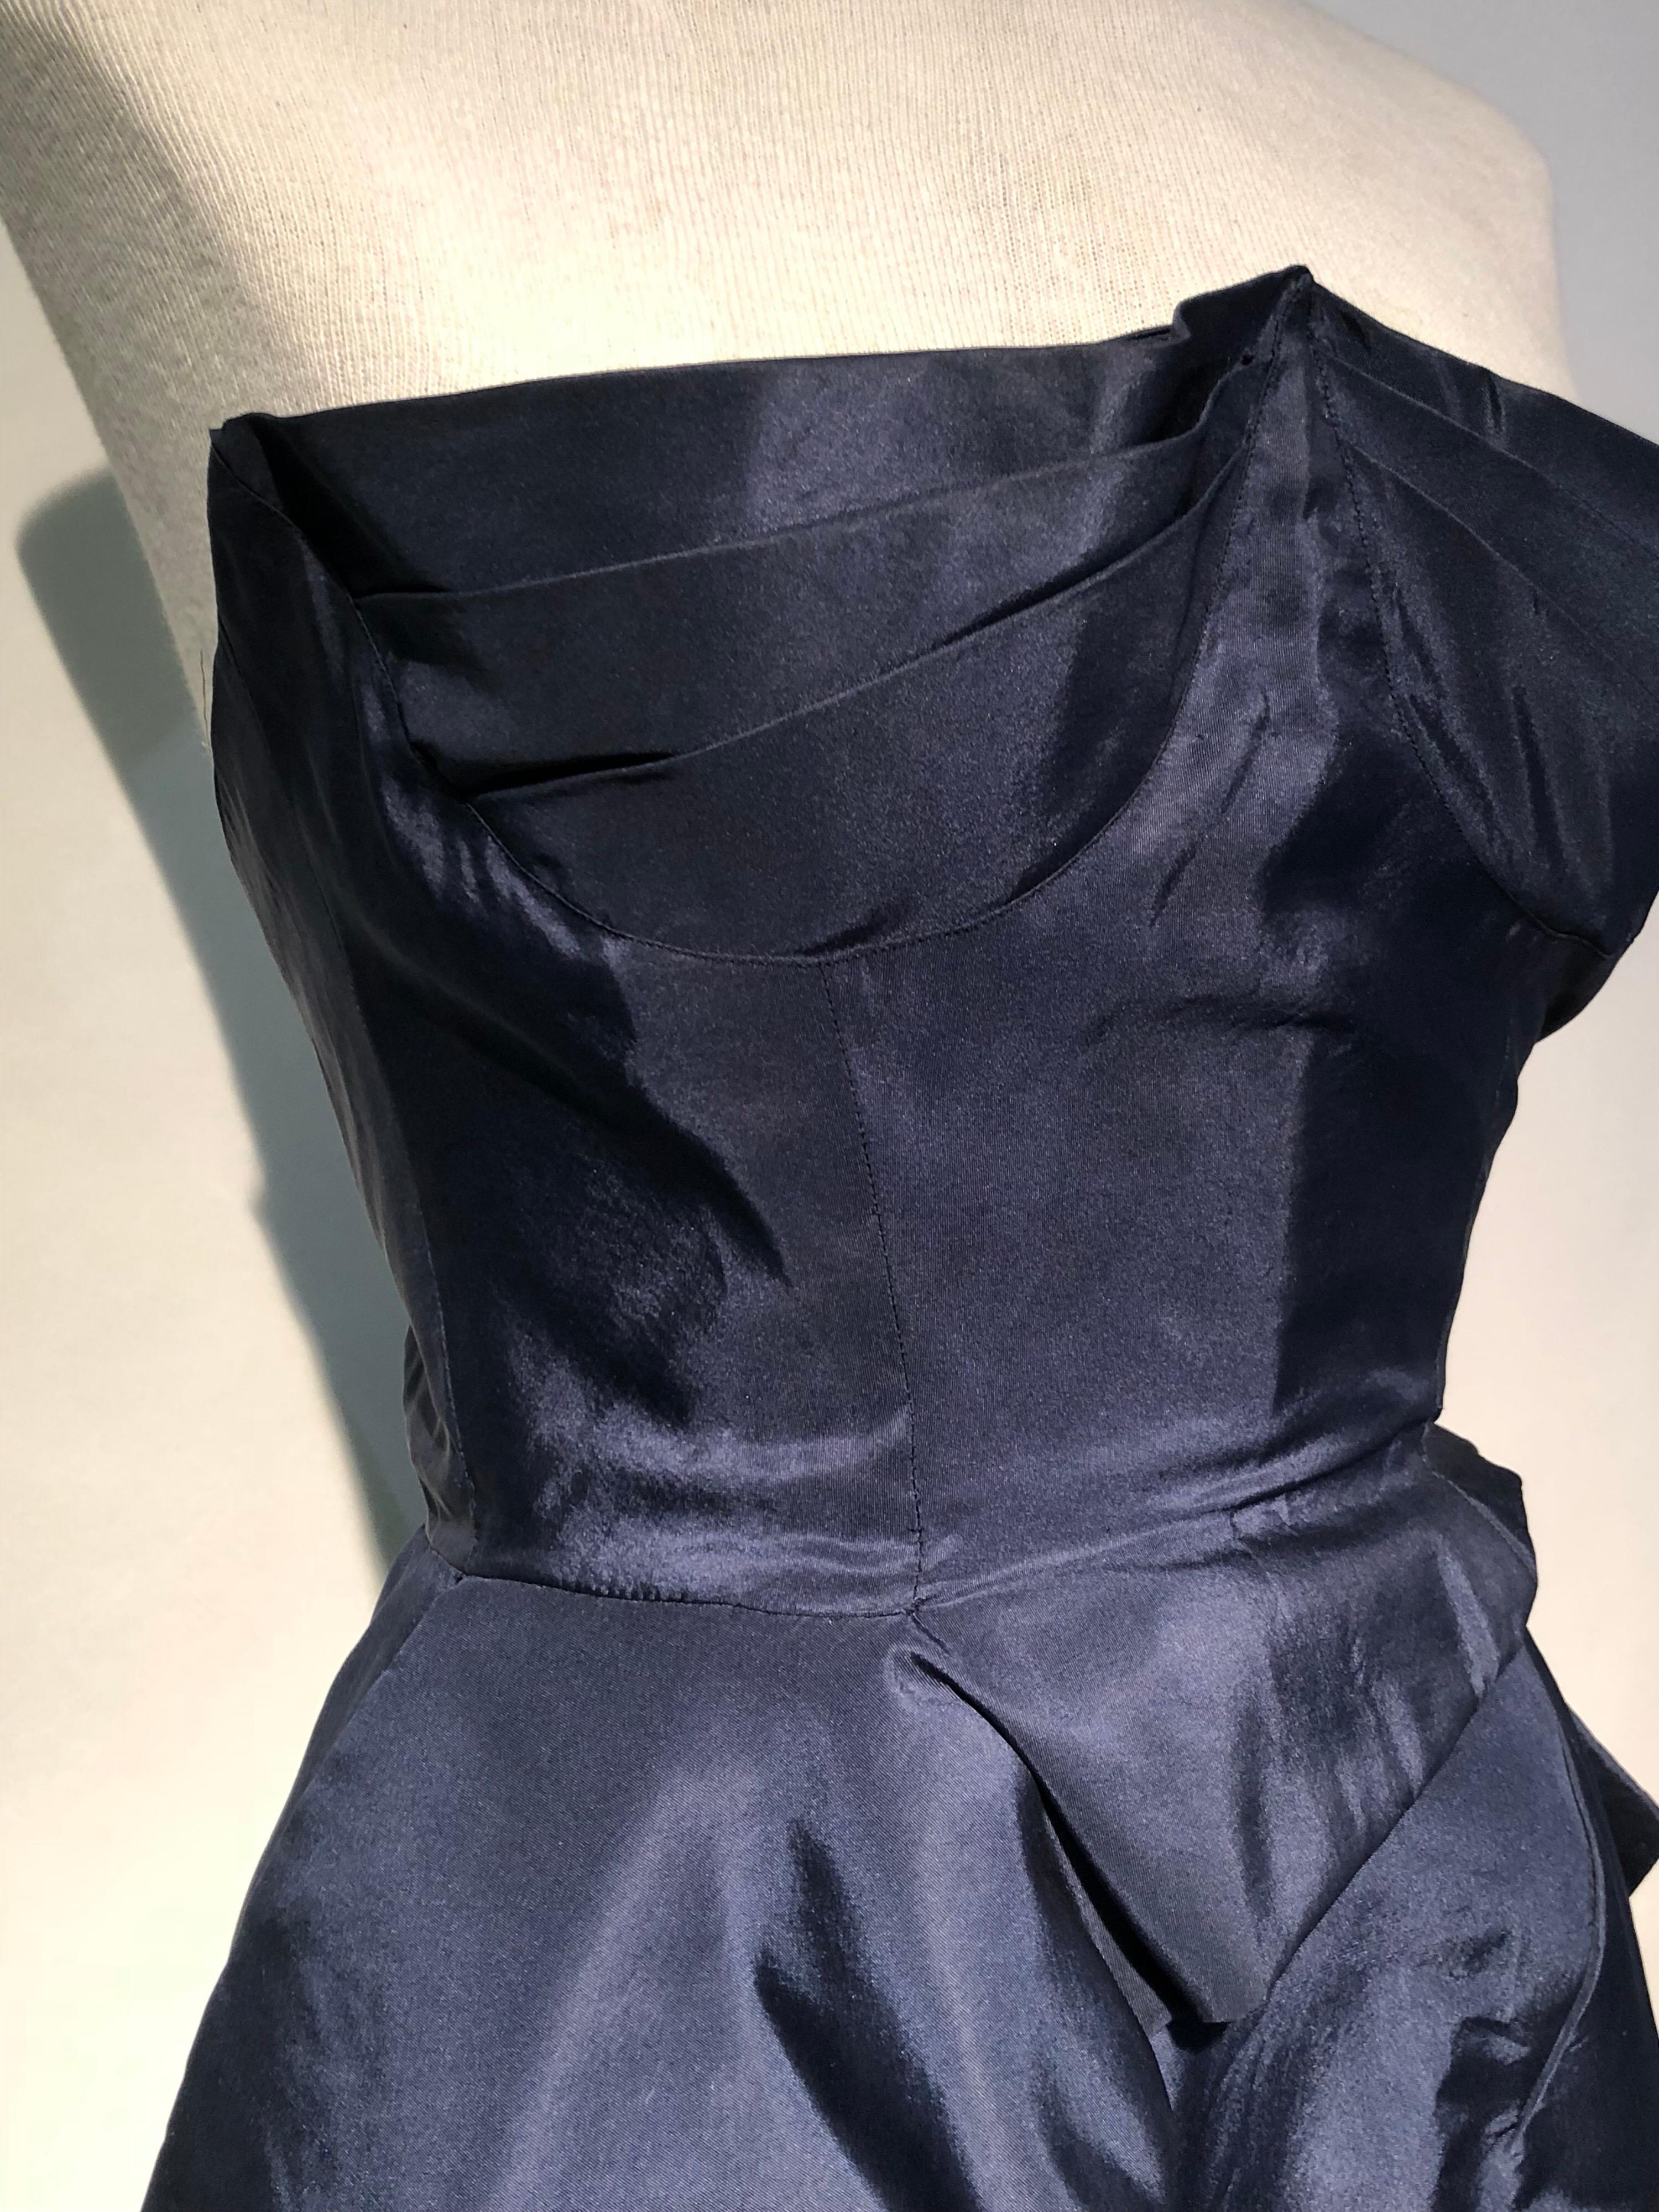 Black Elsa Schiaparelli Haute Couture Navy Silk Taffeta 2-Piece Ball Gown, Late 1940s